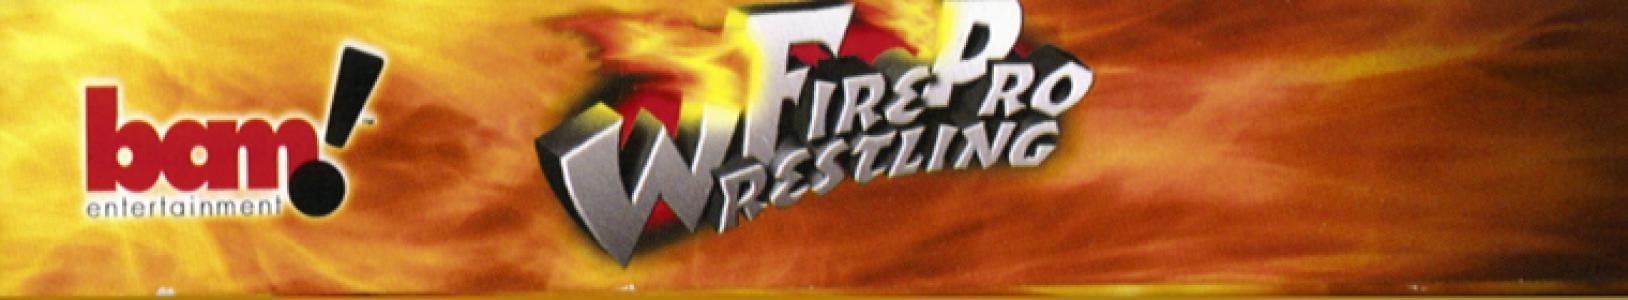 Fire Pro Wrestling banner